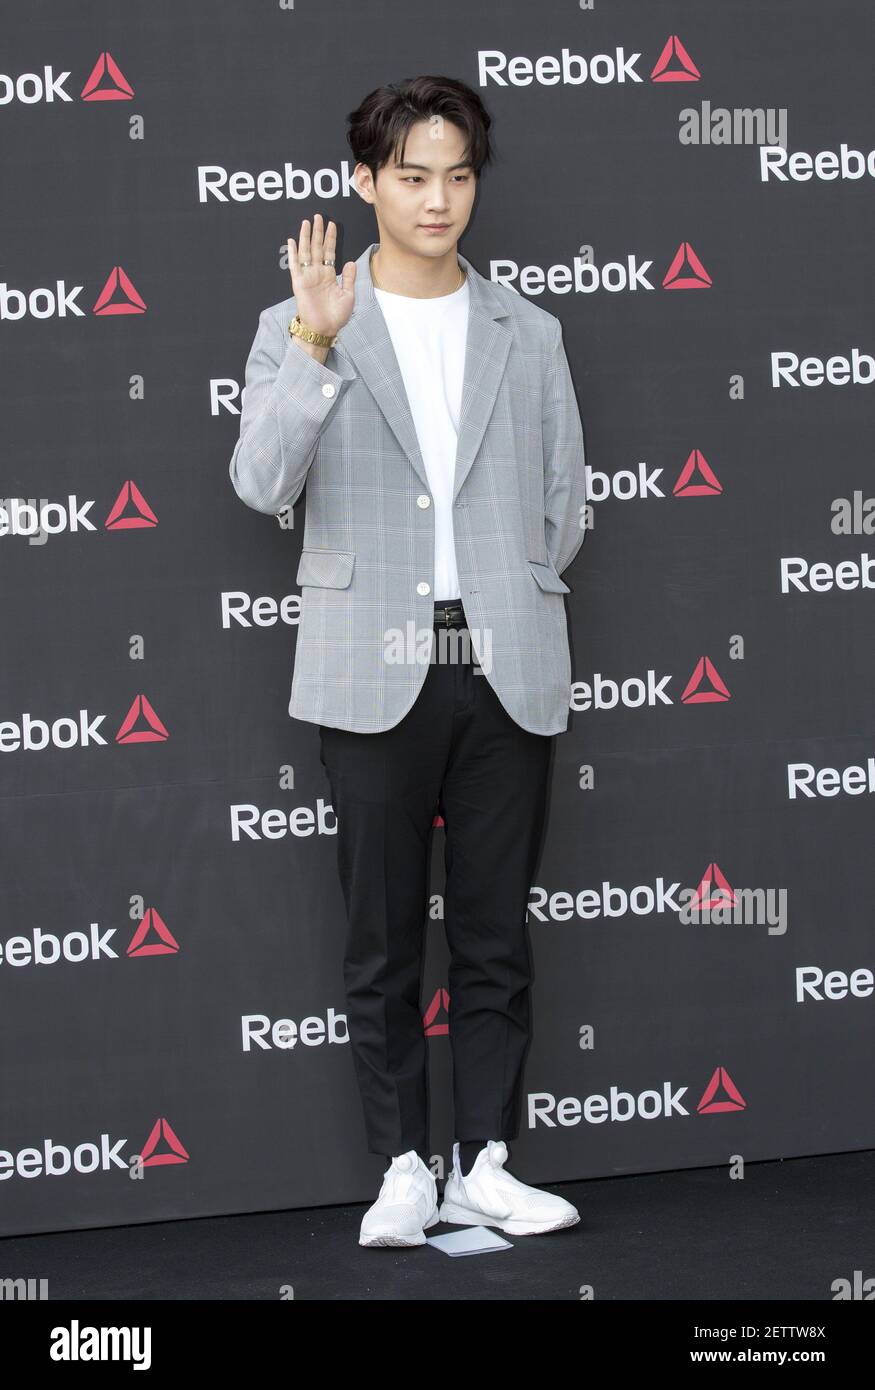 26 2017 Seoul, South Korea : K-Pop Boys group GOT7 member JB, attends photo call for the Reebok Shoes launching in Seoul, South Korea May 26, 2017. Photo Credit: